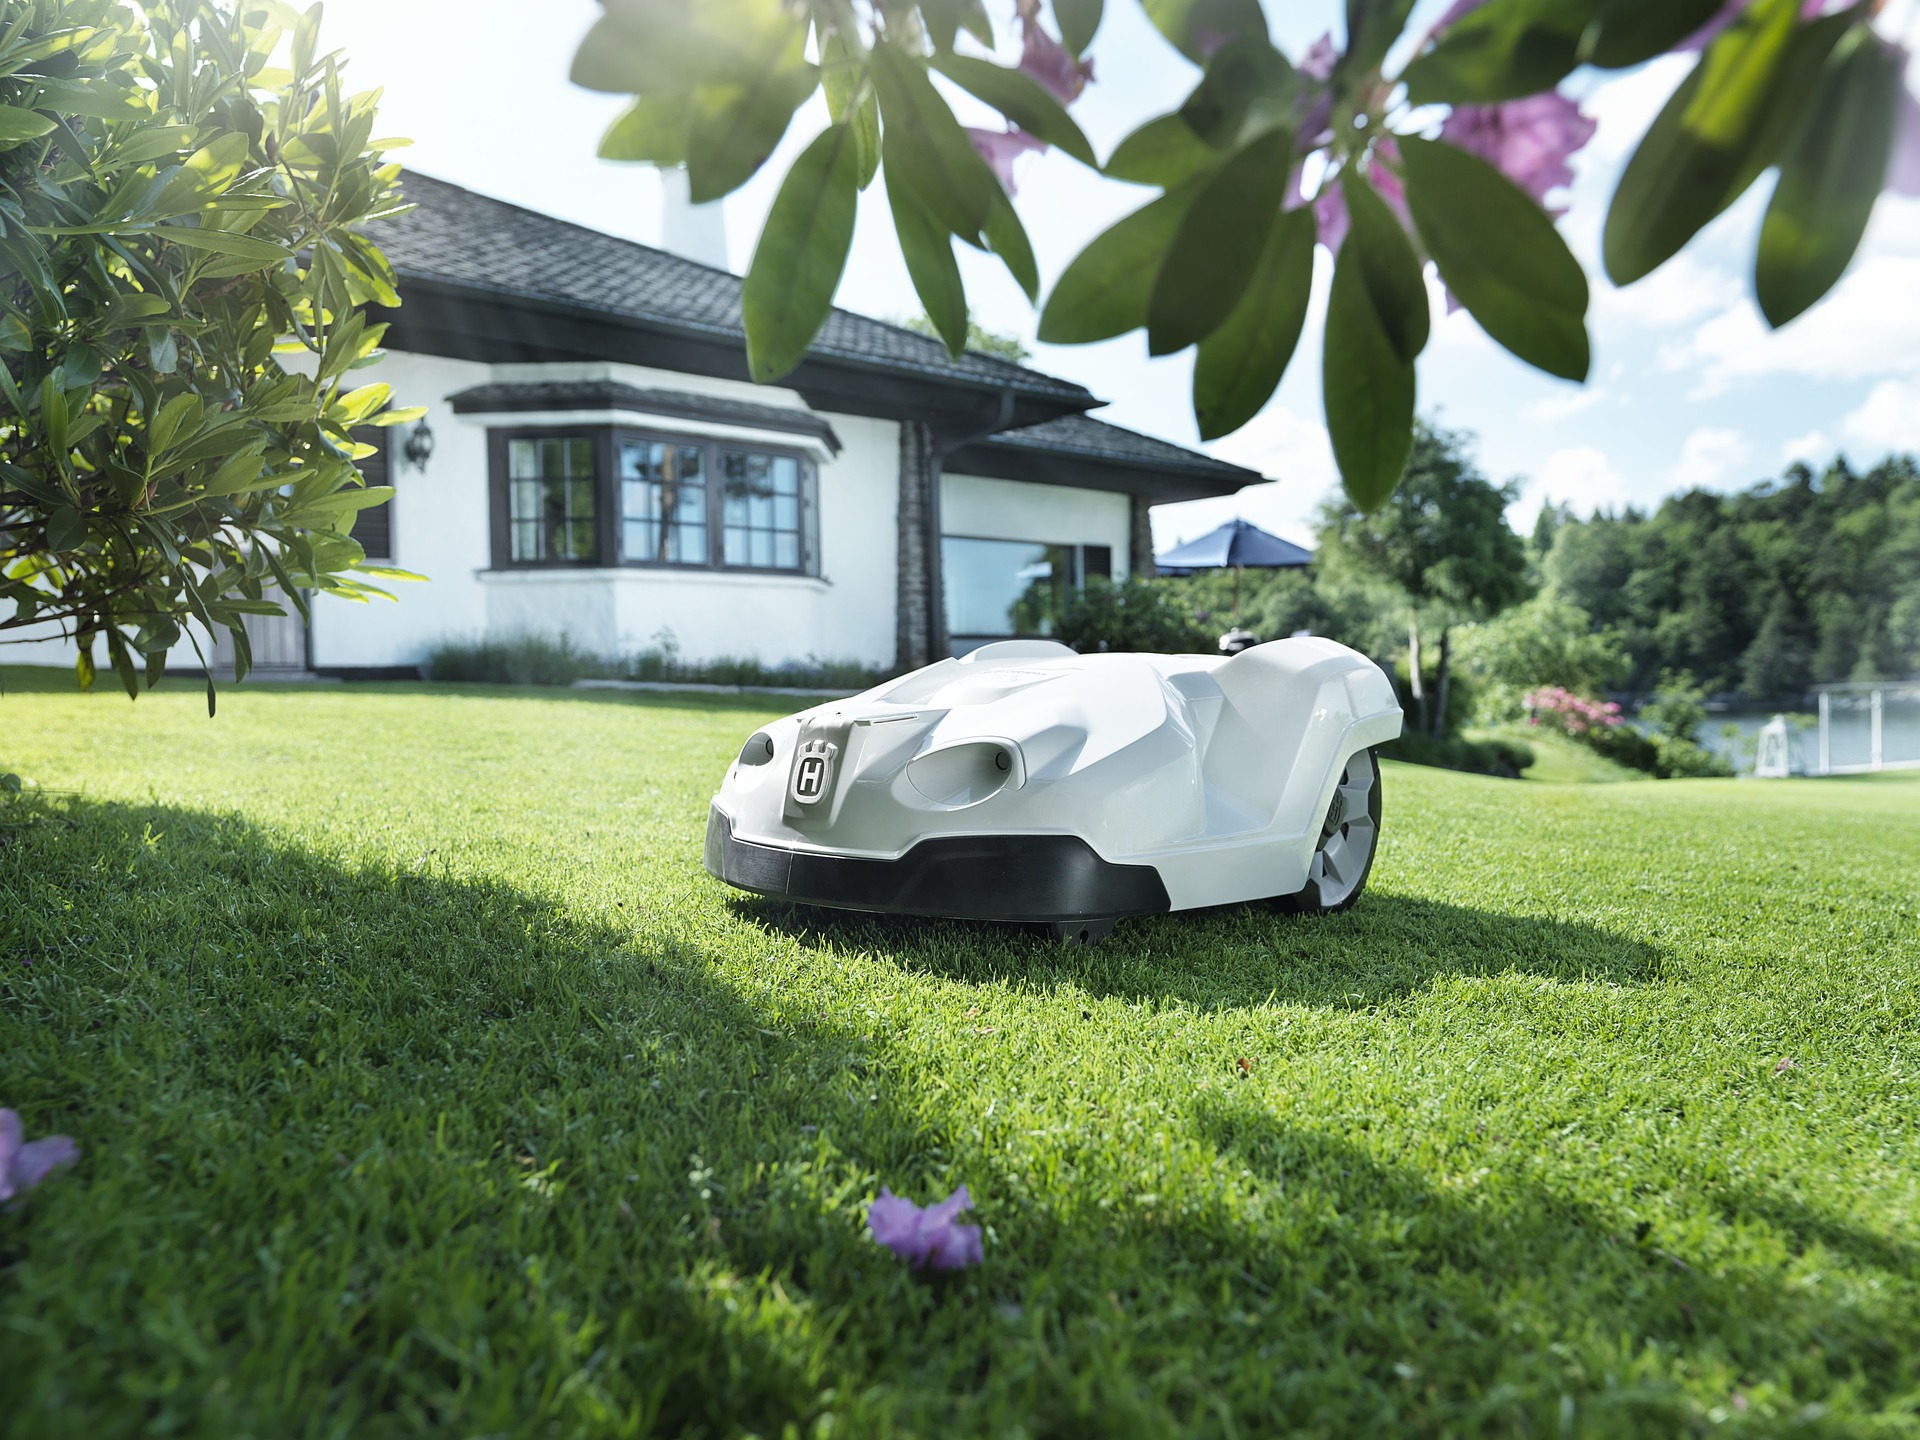 Best Robotic Lawn Mower for 2 Acres